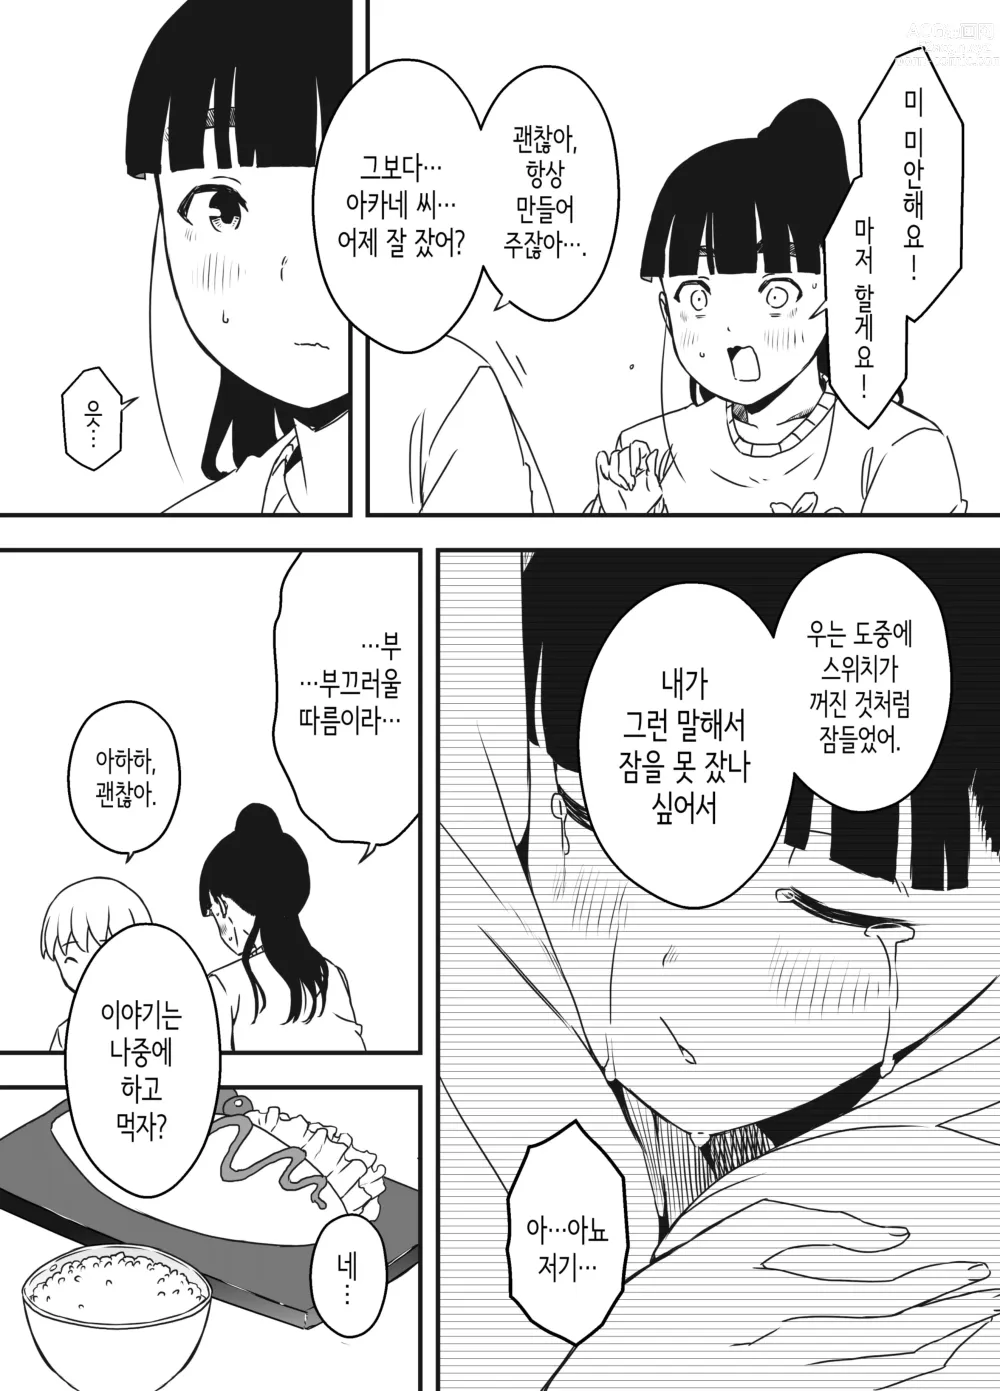 Page 21 of doujinshi 의붓 누나와의 7일간 생활 5